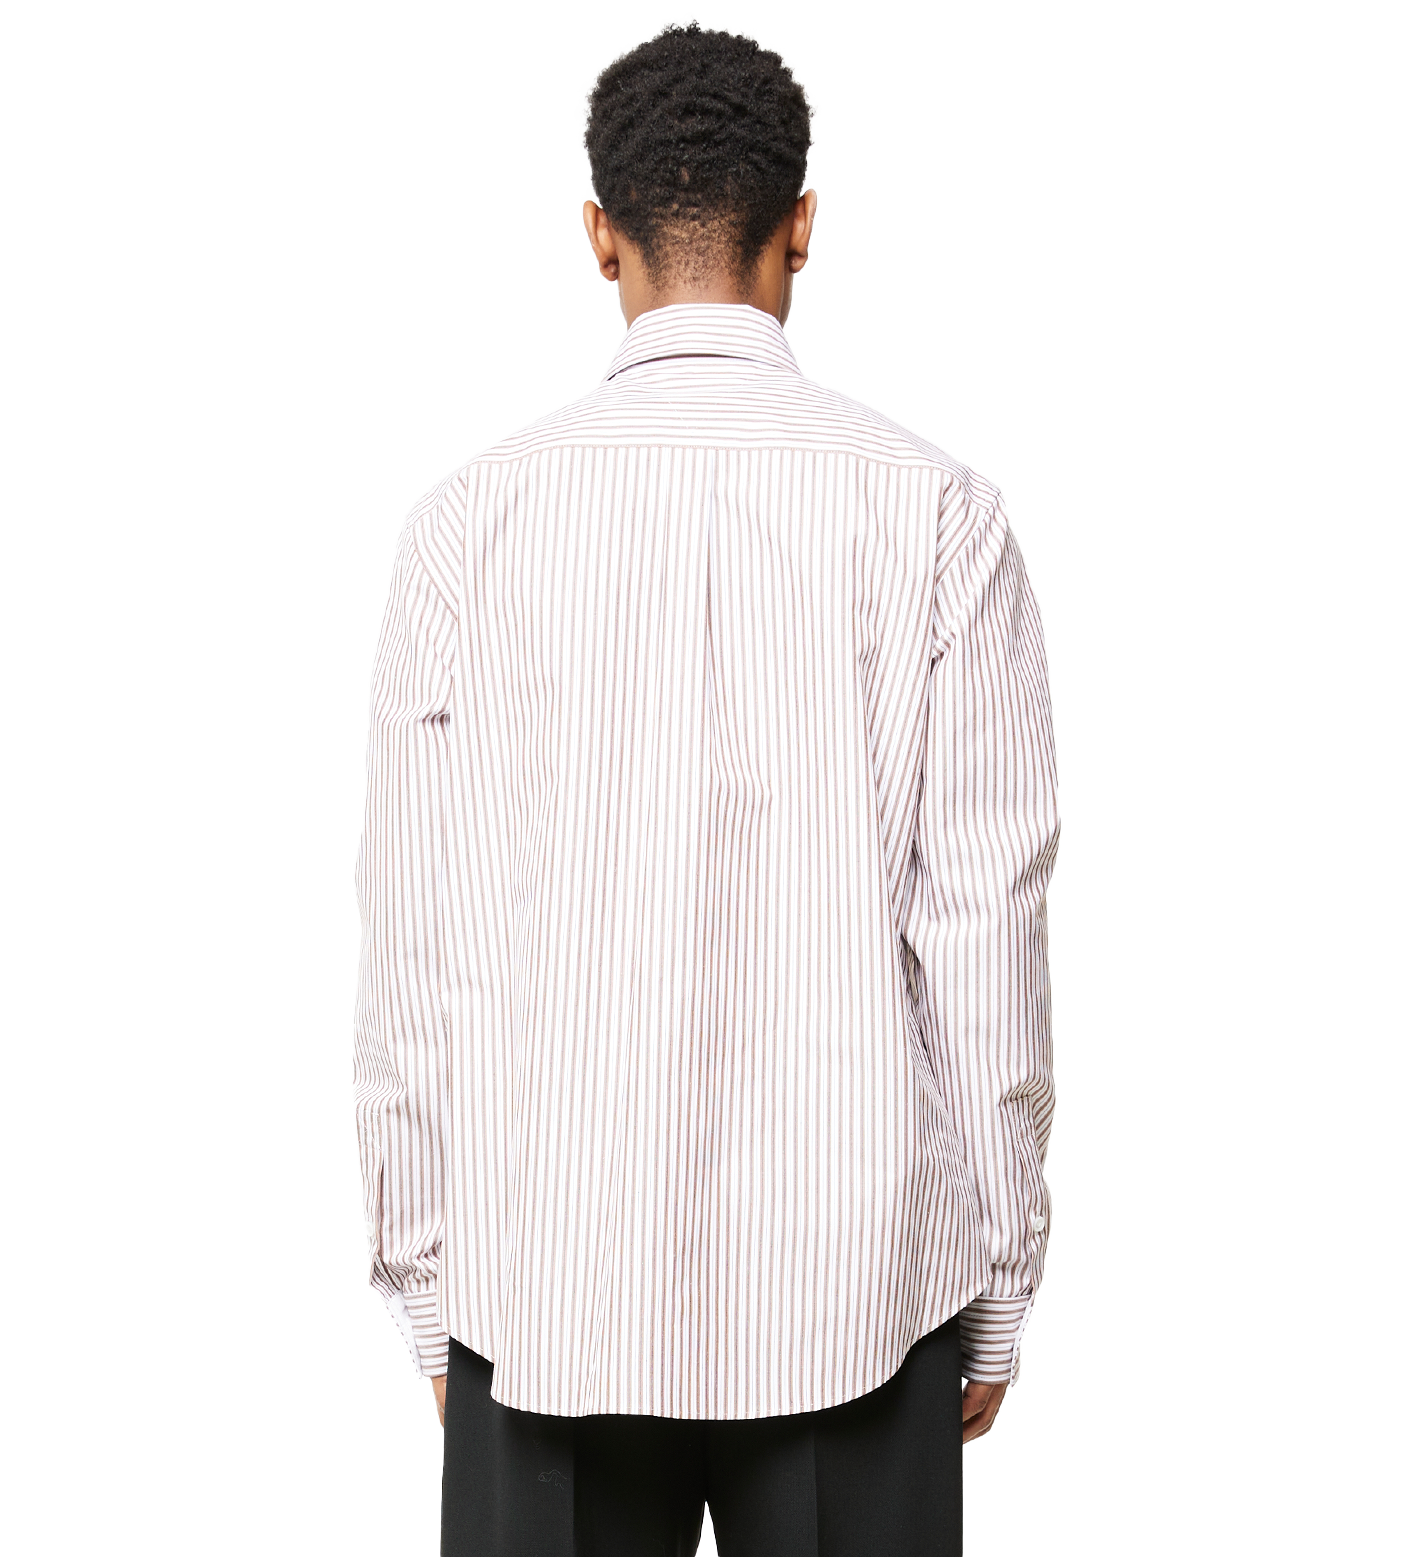 Compact Cotton Striped Shirt Pale Grey